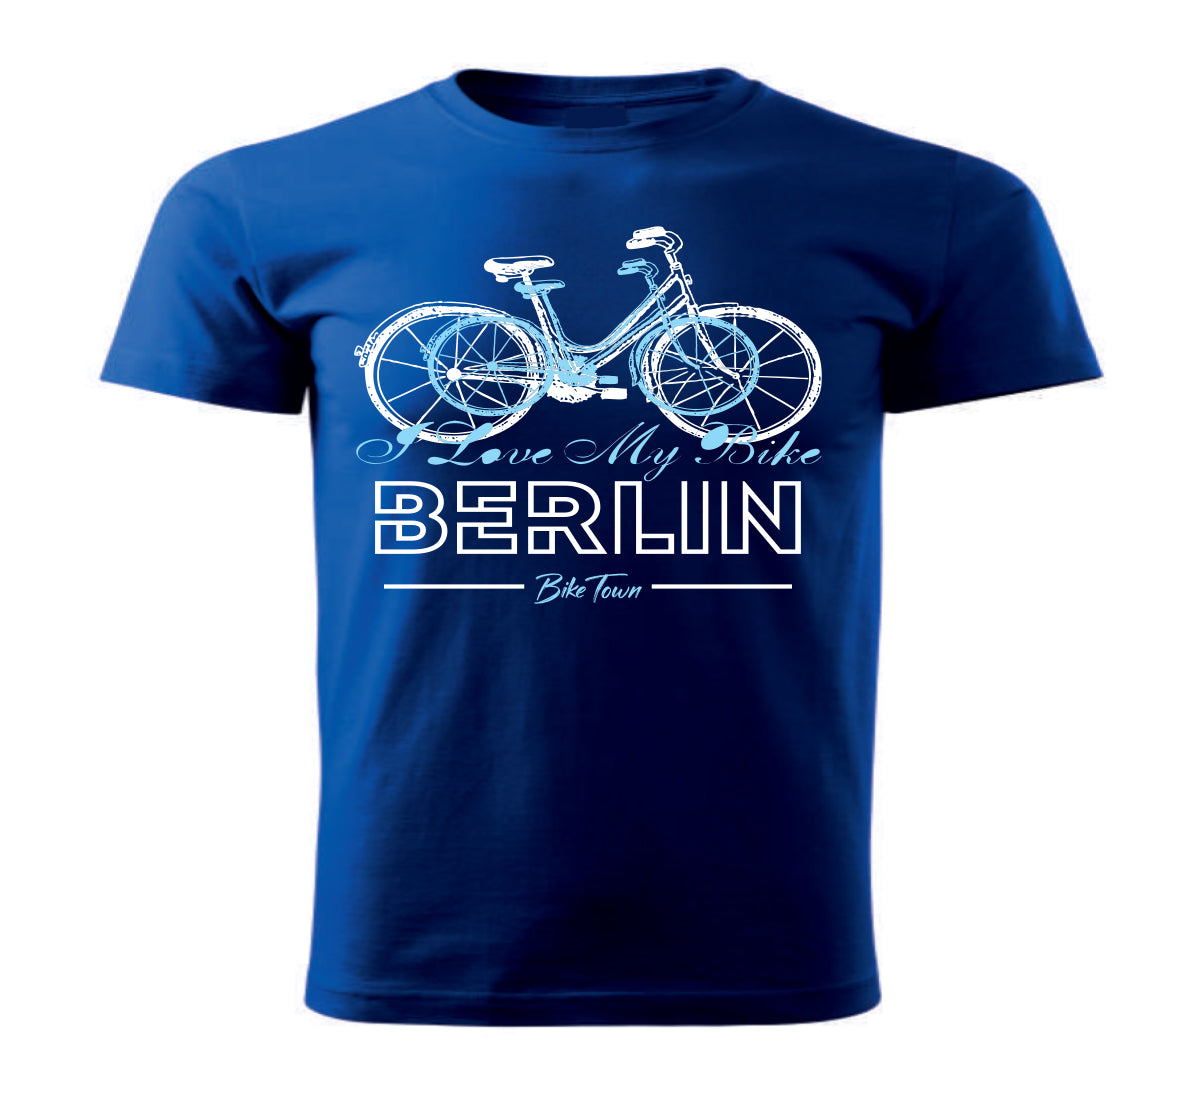 T-Shirt "Berlin Bike royalblau" von Robin Ruth